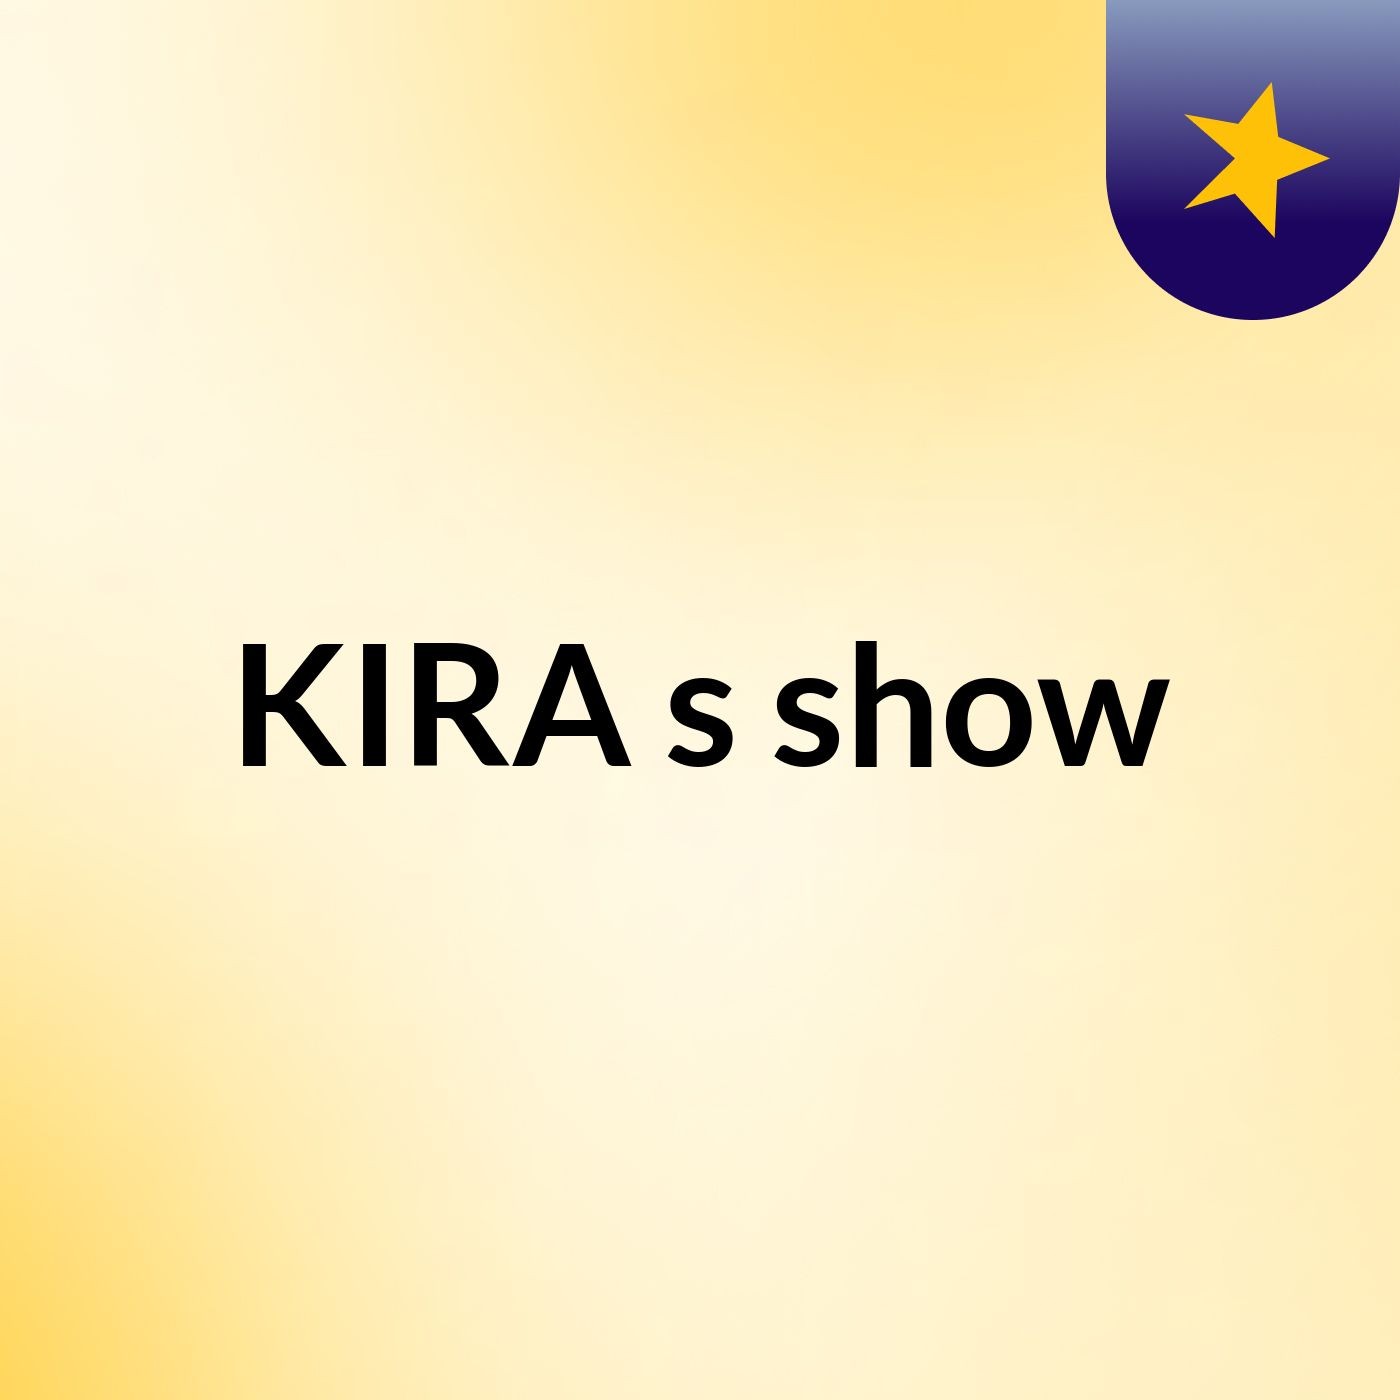 KIRA's show